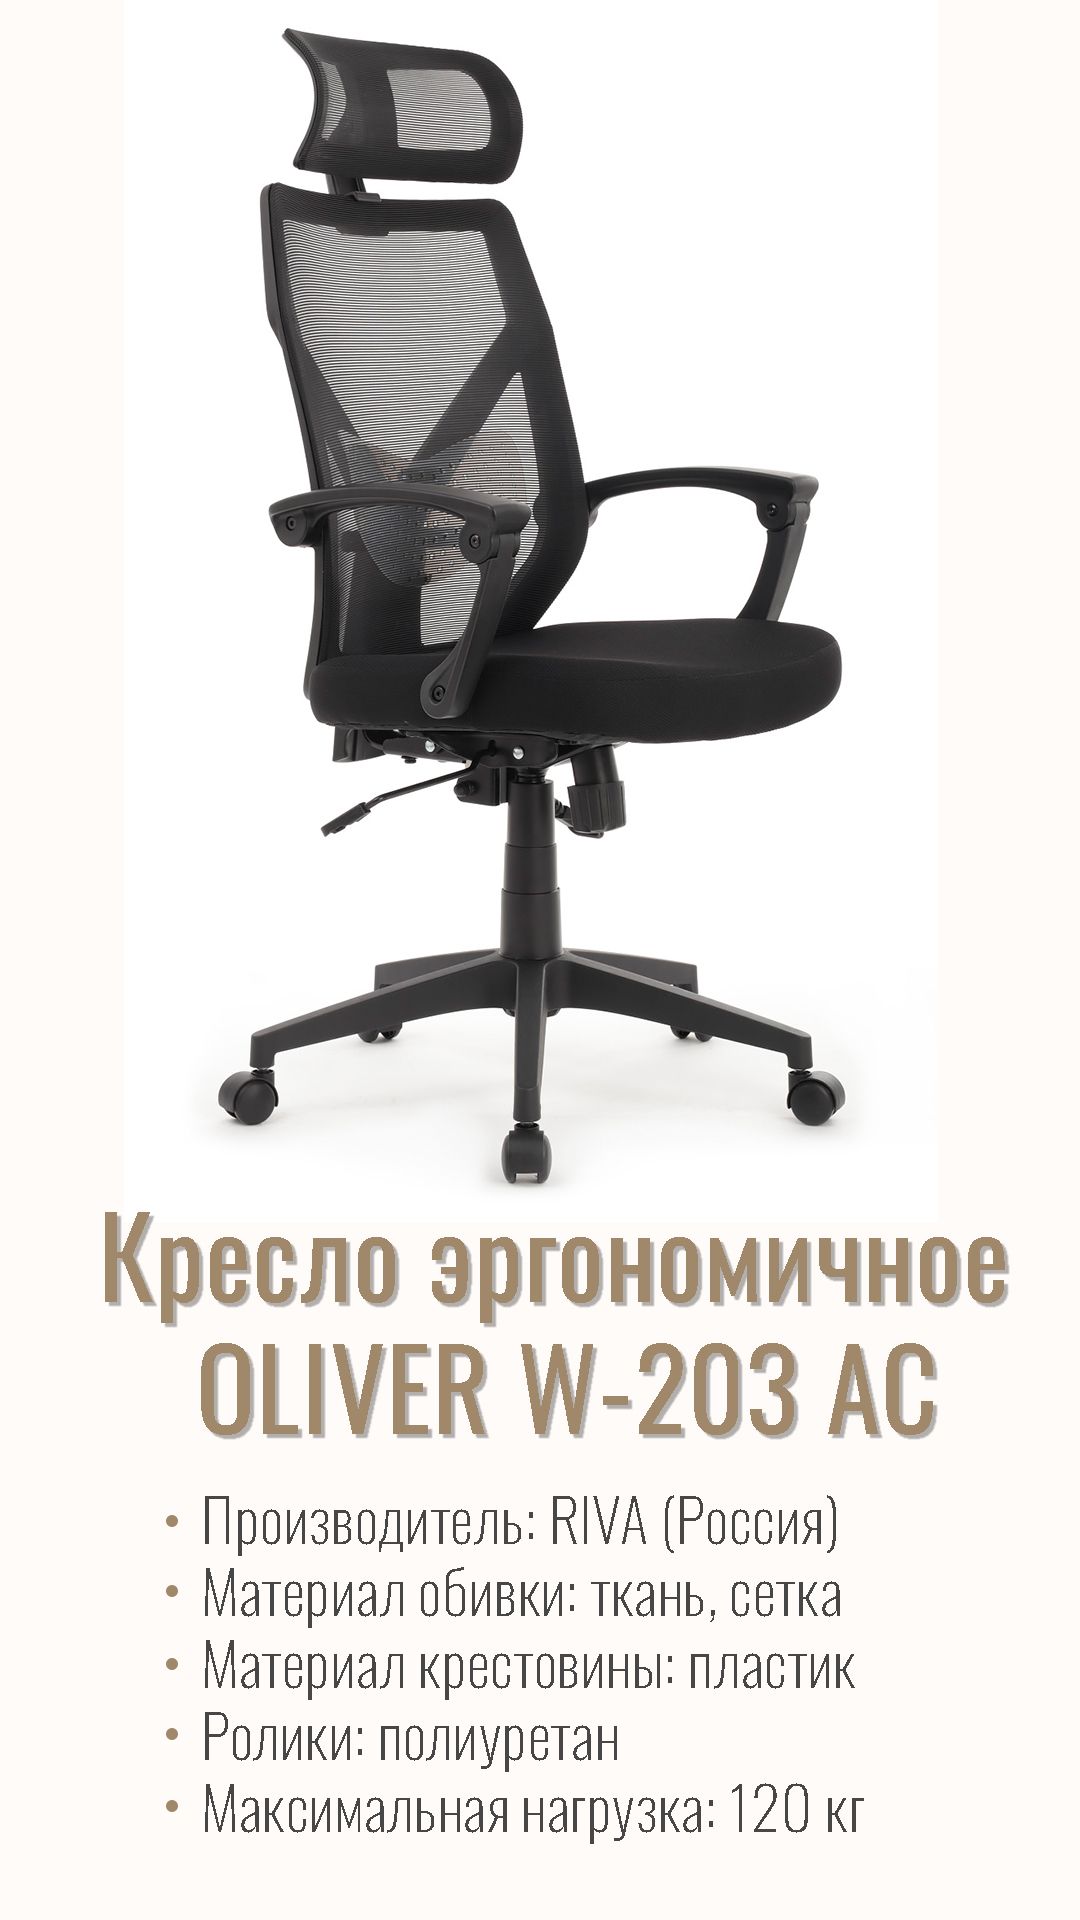 Кресло RIVA Chair OLIVER W-203 AC черный